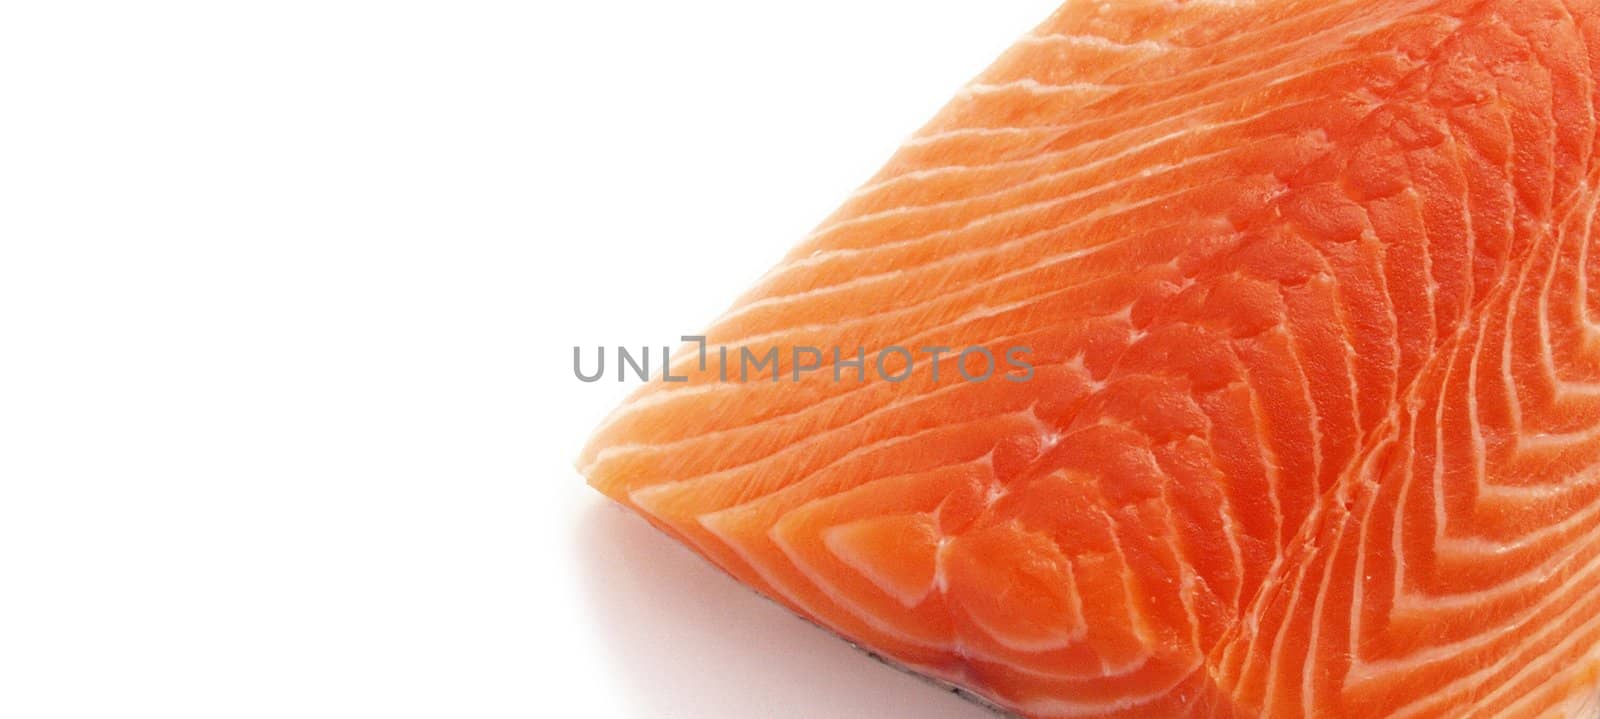 uncooked fresh salmon fish by ozaiachin